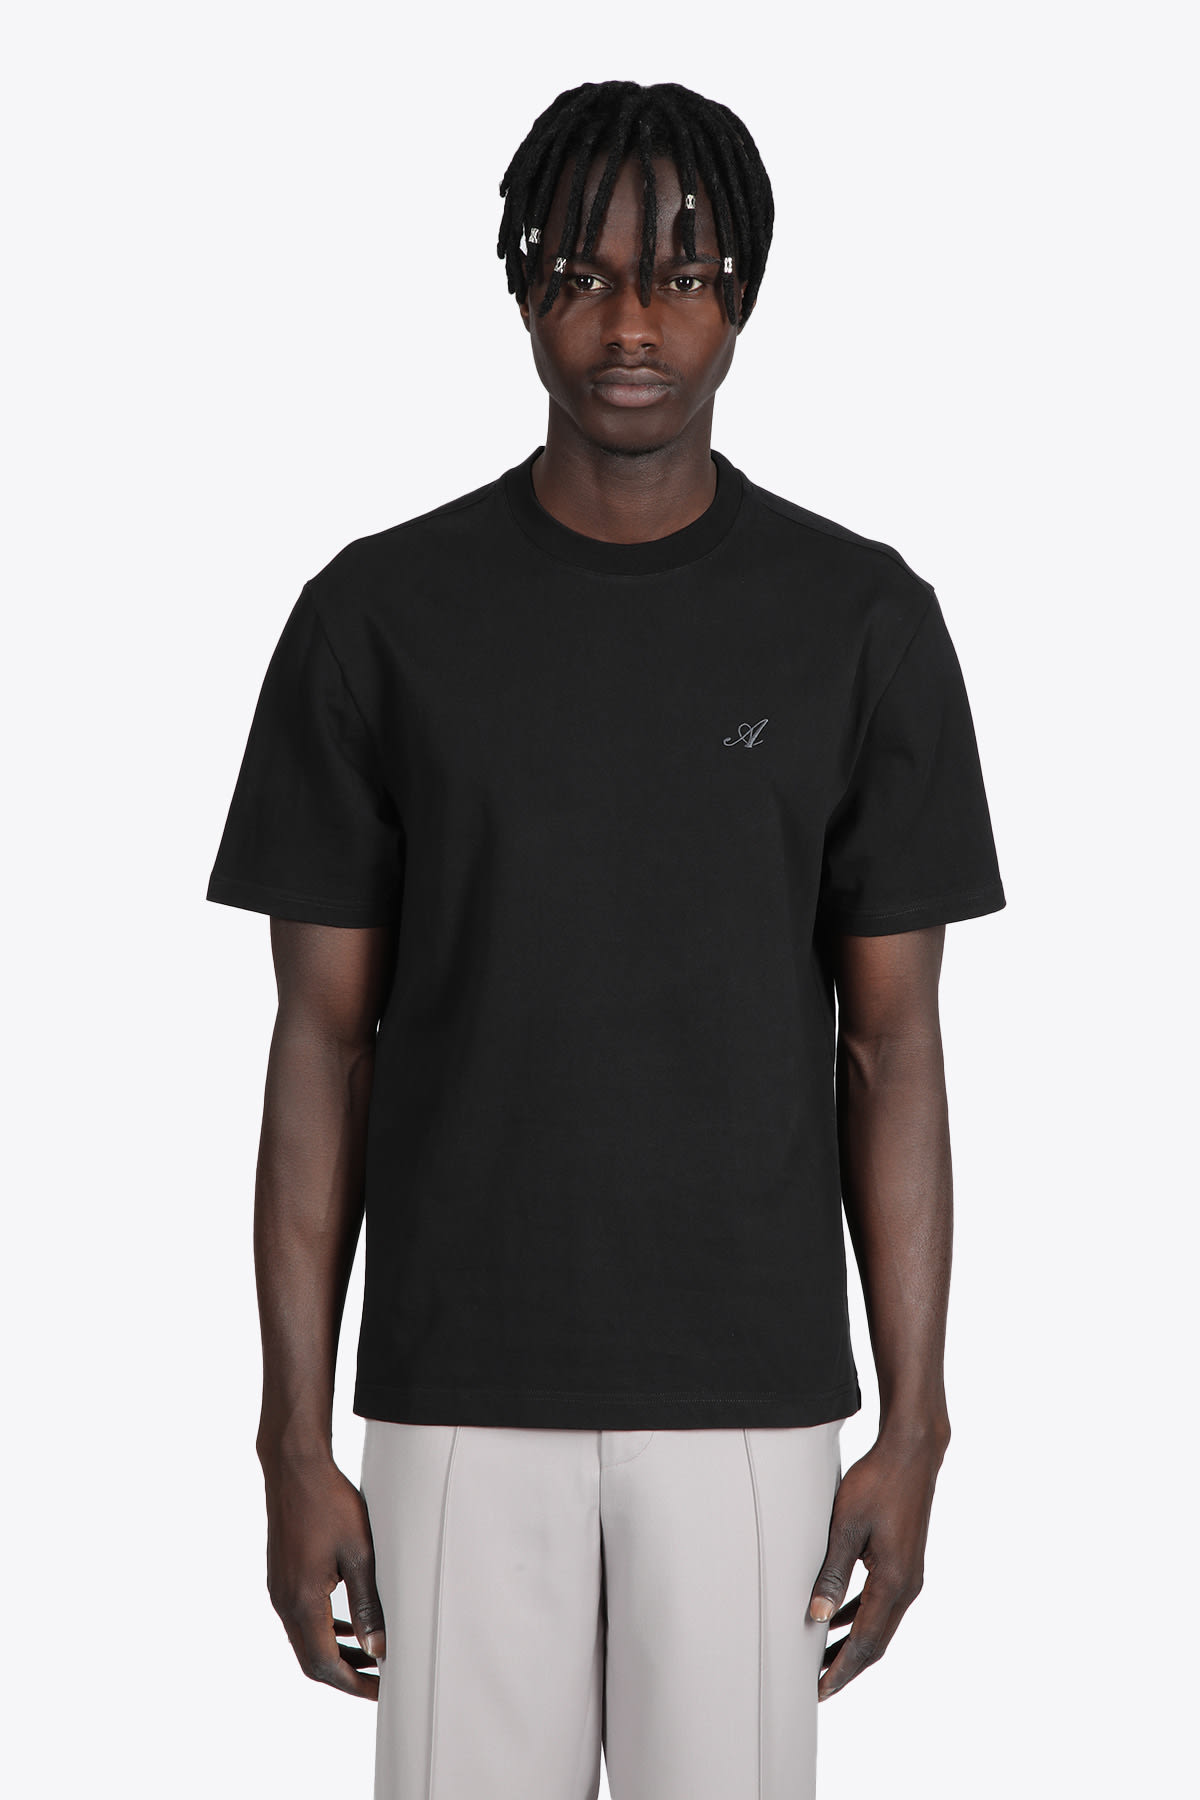 Axel Arigato Signature T-shirt Black cotton t-shirt with A chest embroidery - Signature T-shirt